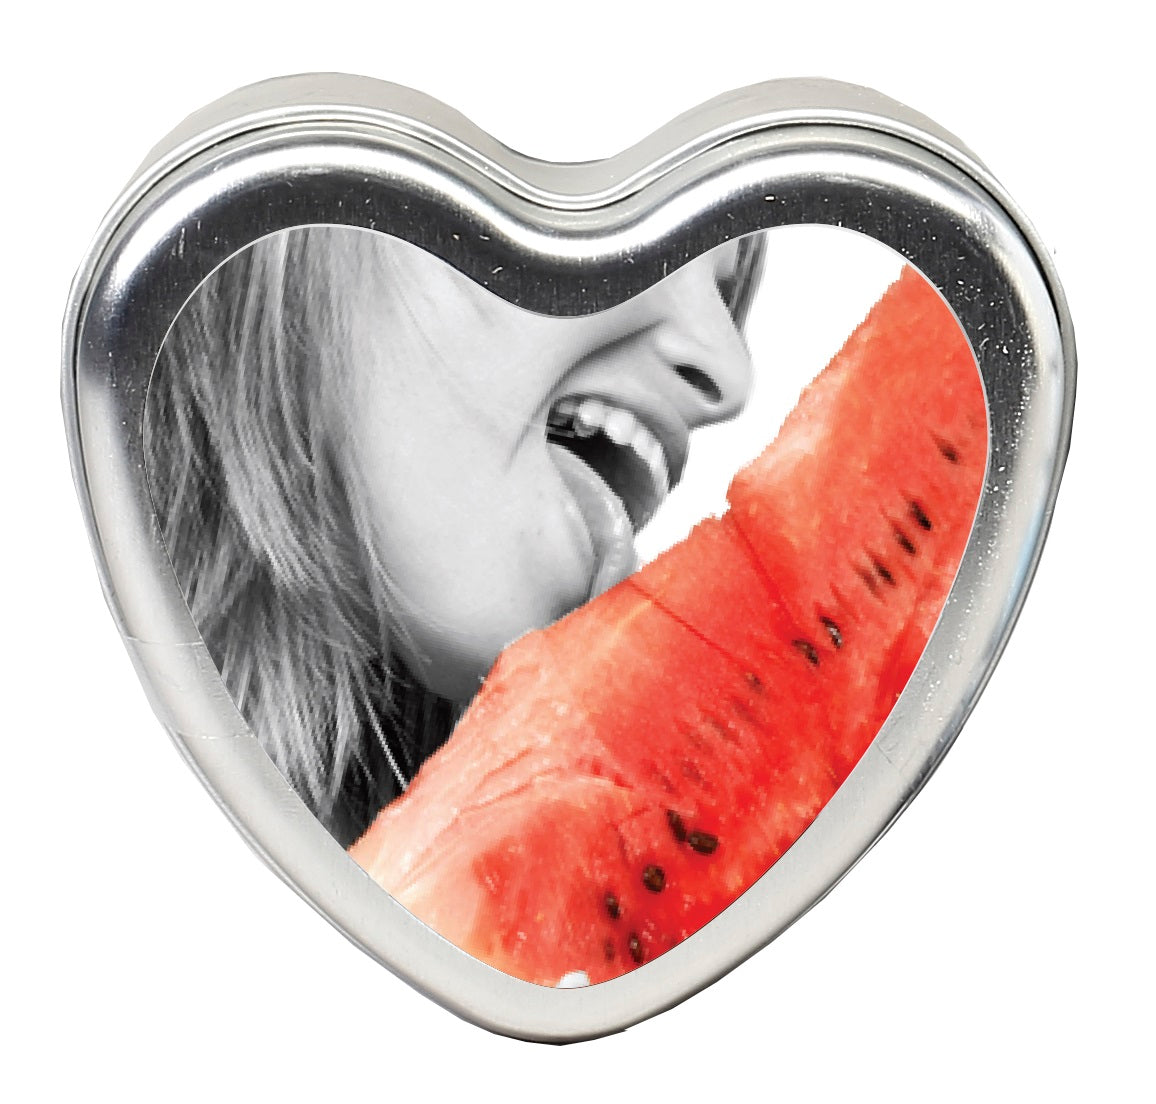 Edible Heart Candle - - 4 Oz. Watermelon